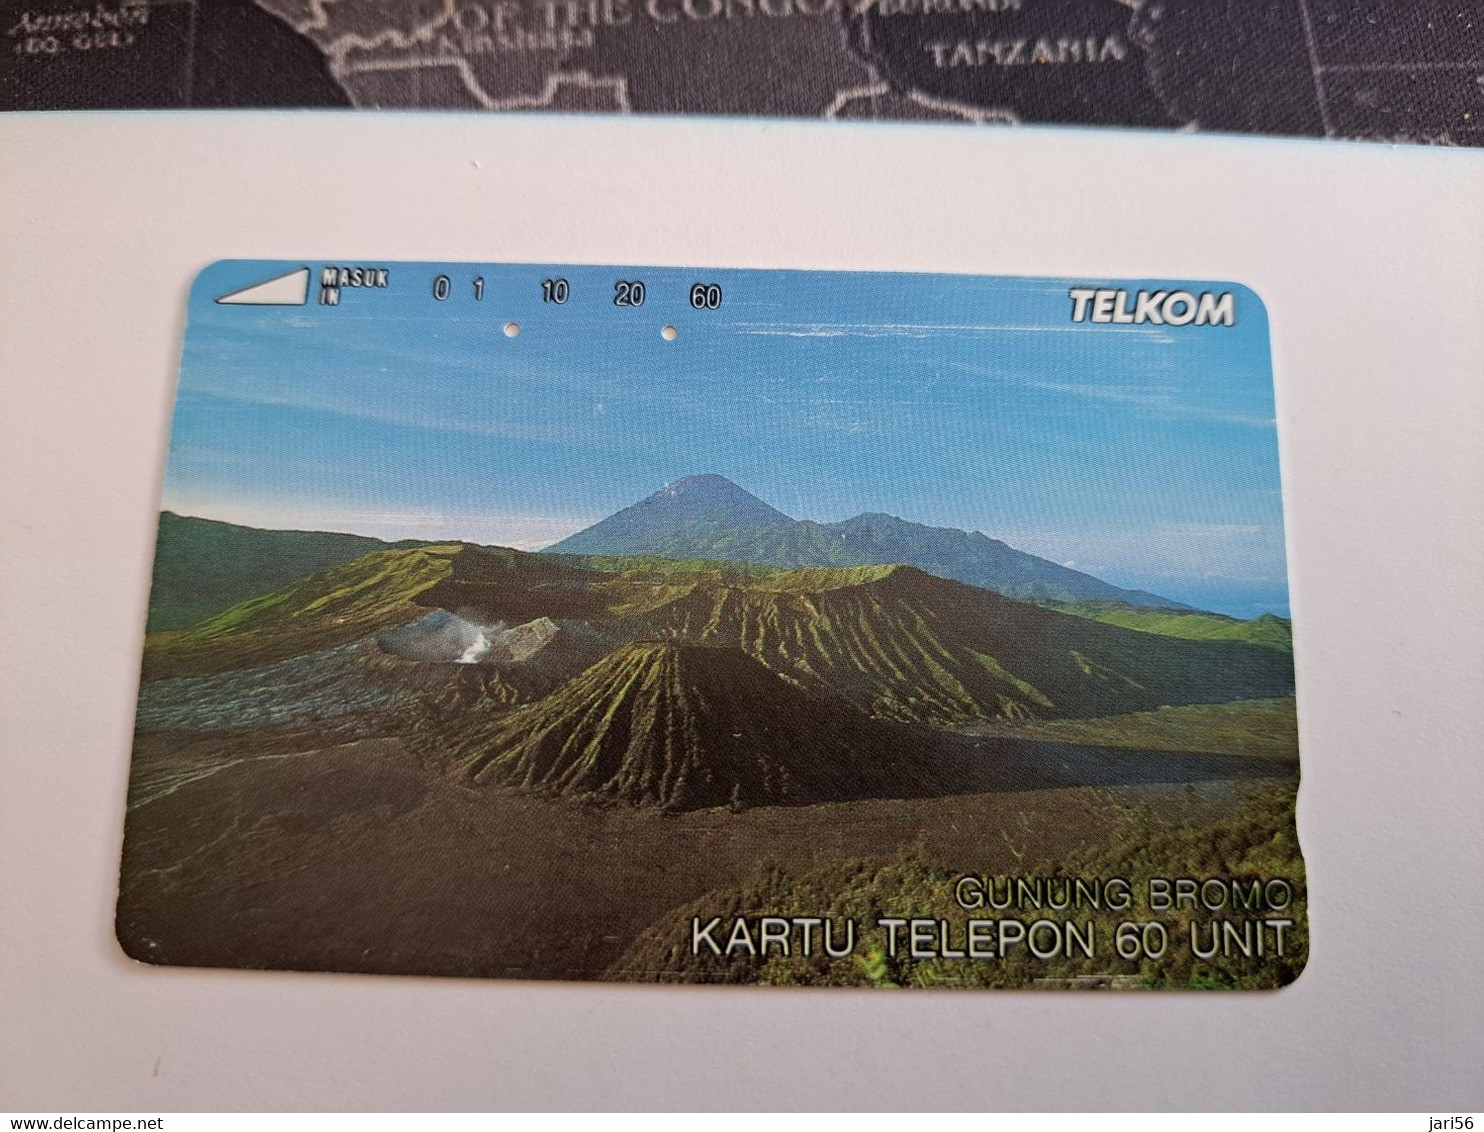 INDONESIA MAGNETIC/TAMURA  60  UNITS /  MOUNTAIN GUNUNG BROMO          MAGNETIC   CARD    **9832** - Indonesia